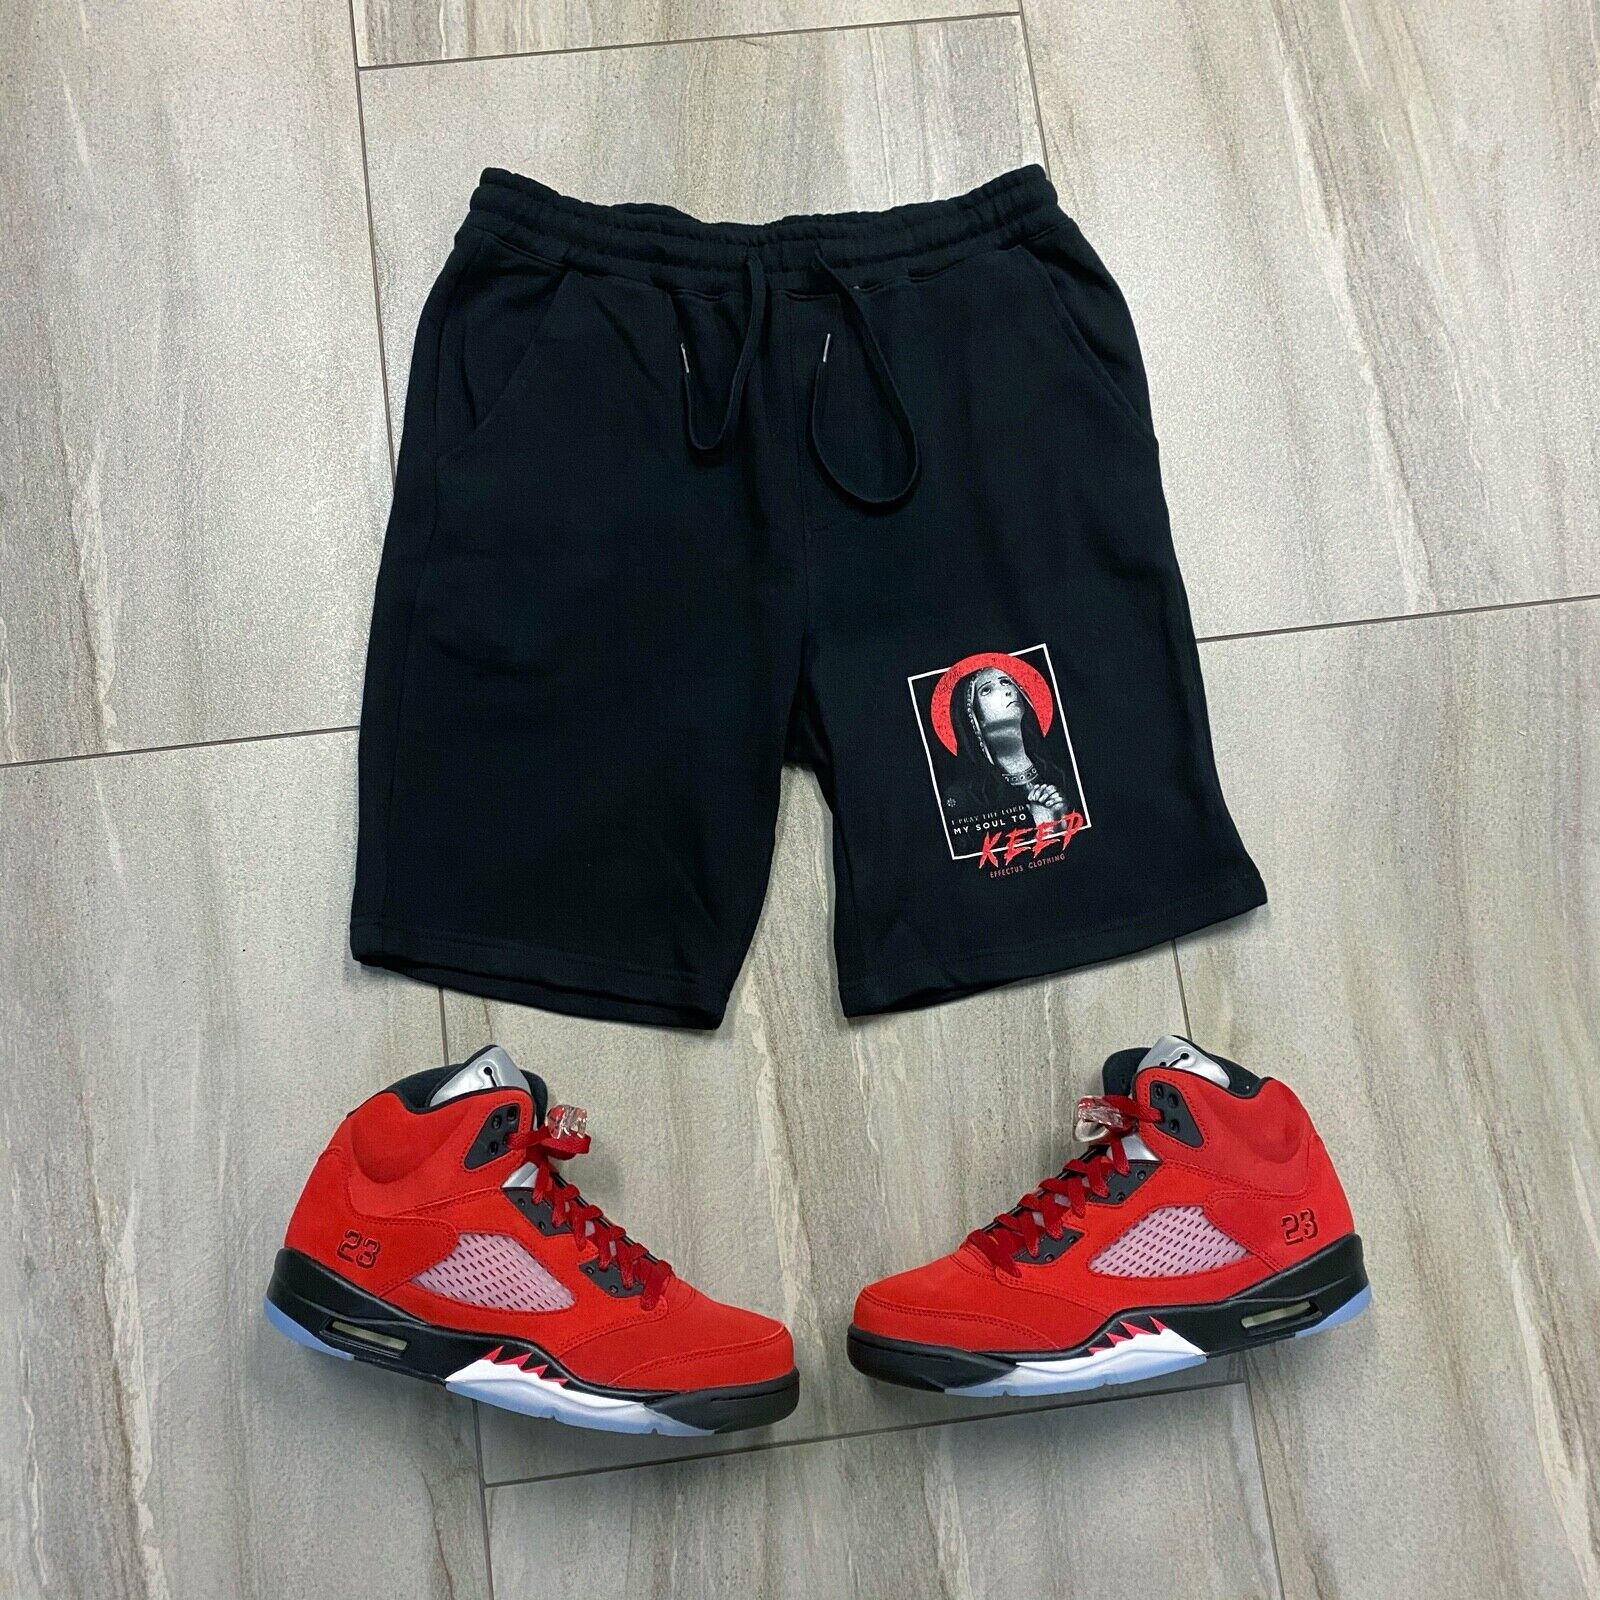 Shorts to match Air Jordan Retro 5 Raging Bulls. Soul Shorts 